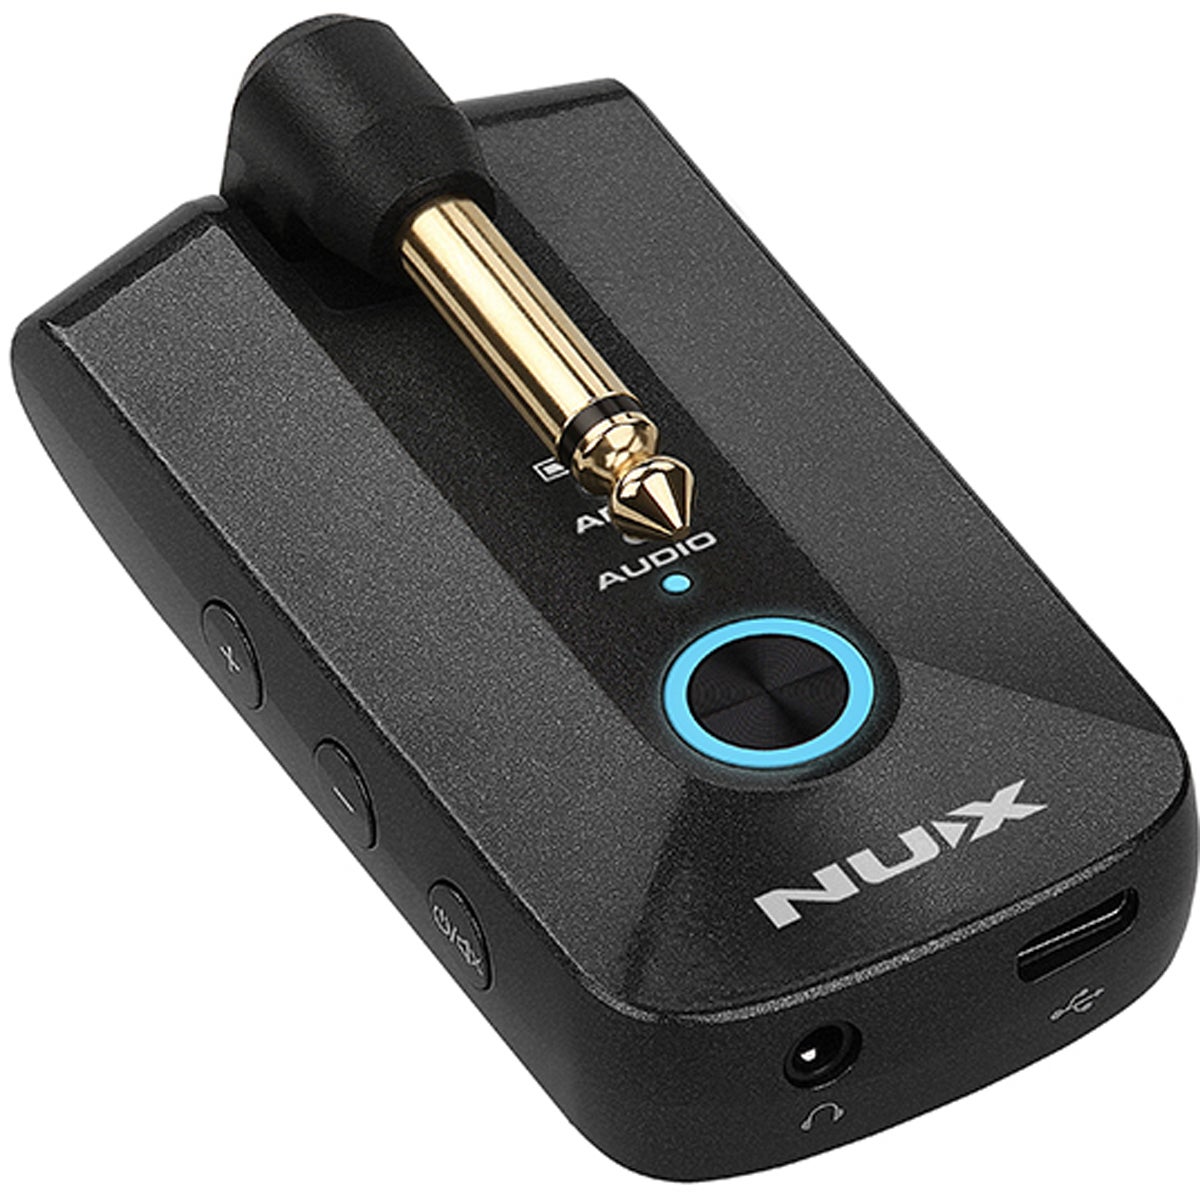 Nux Mighty Plug Pro Hovedtelefon forstærker